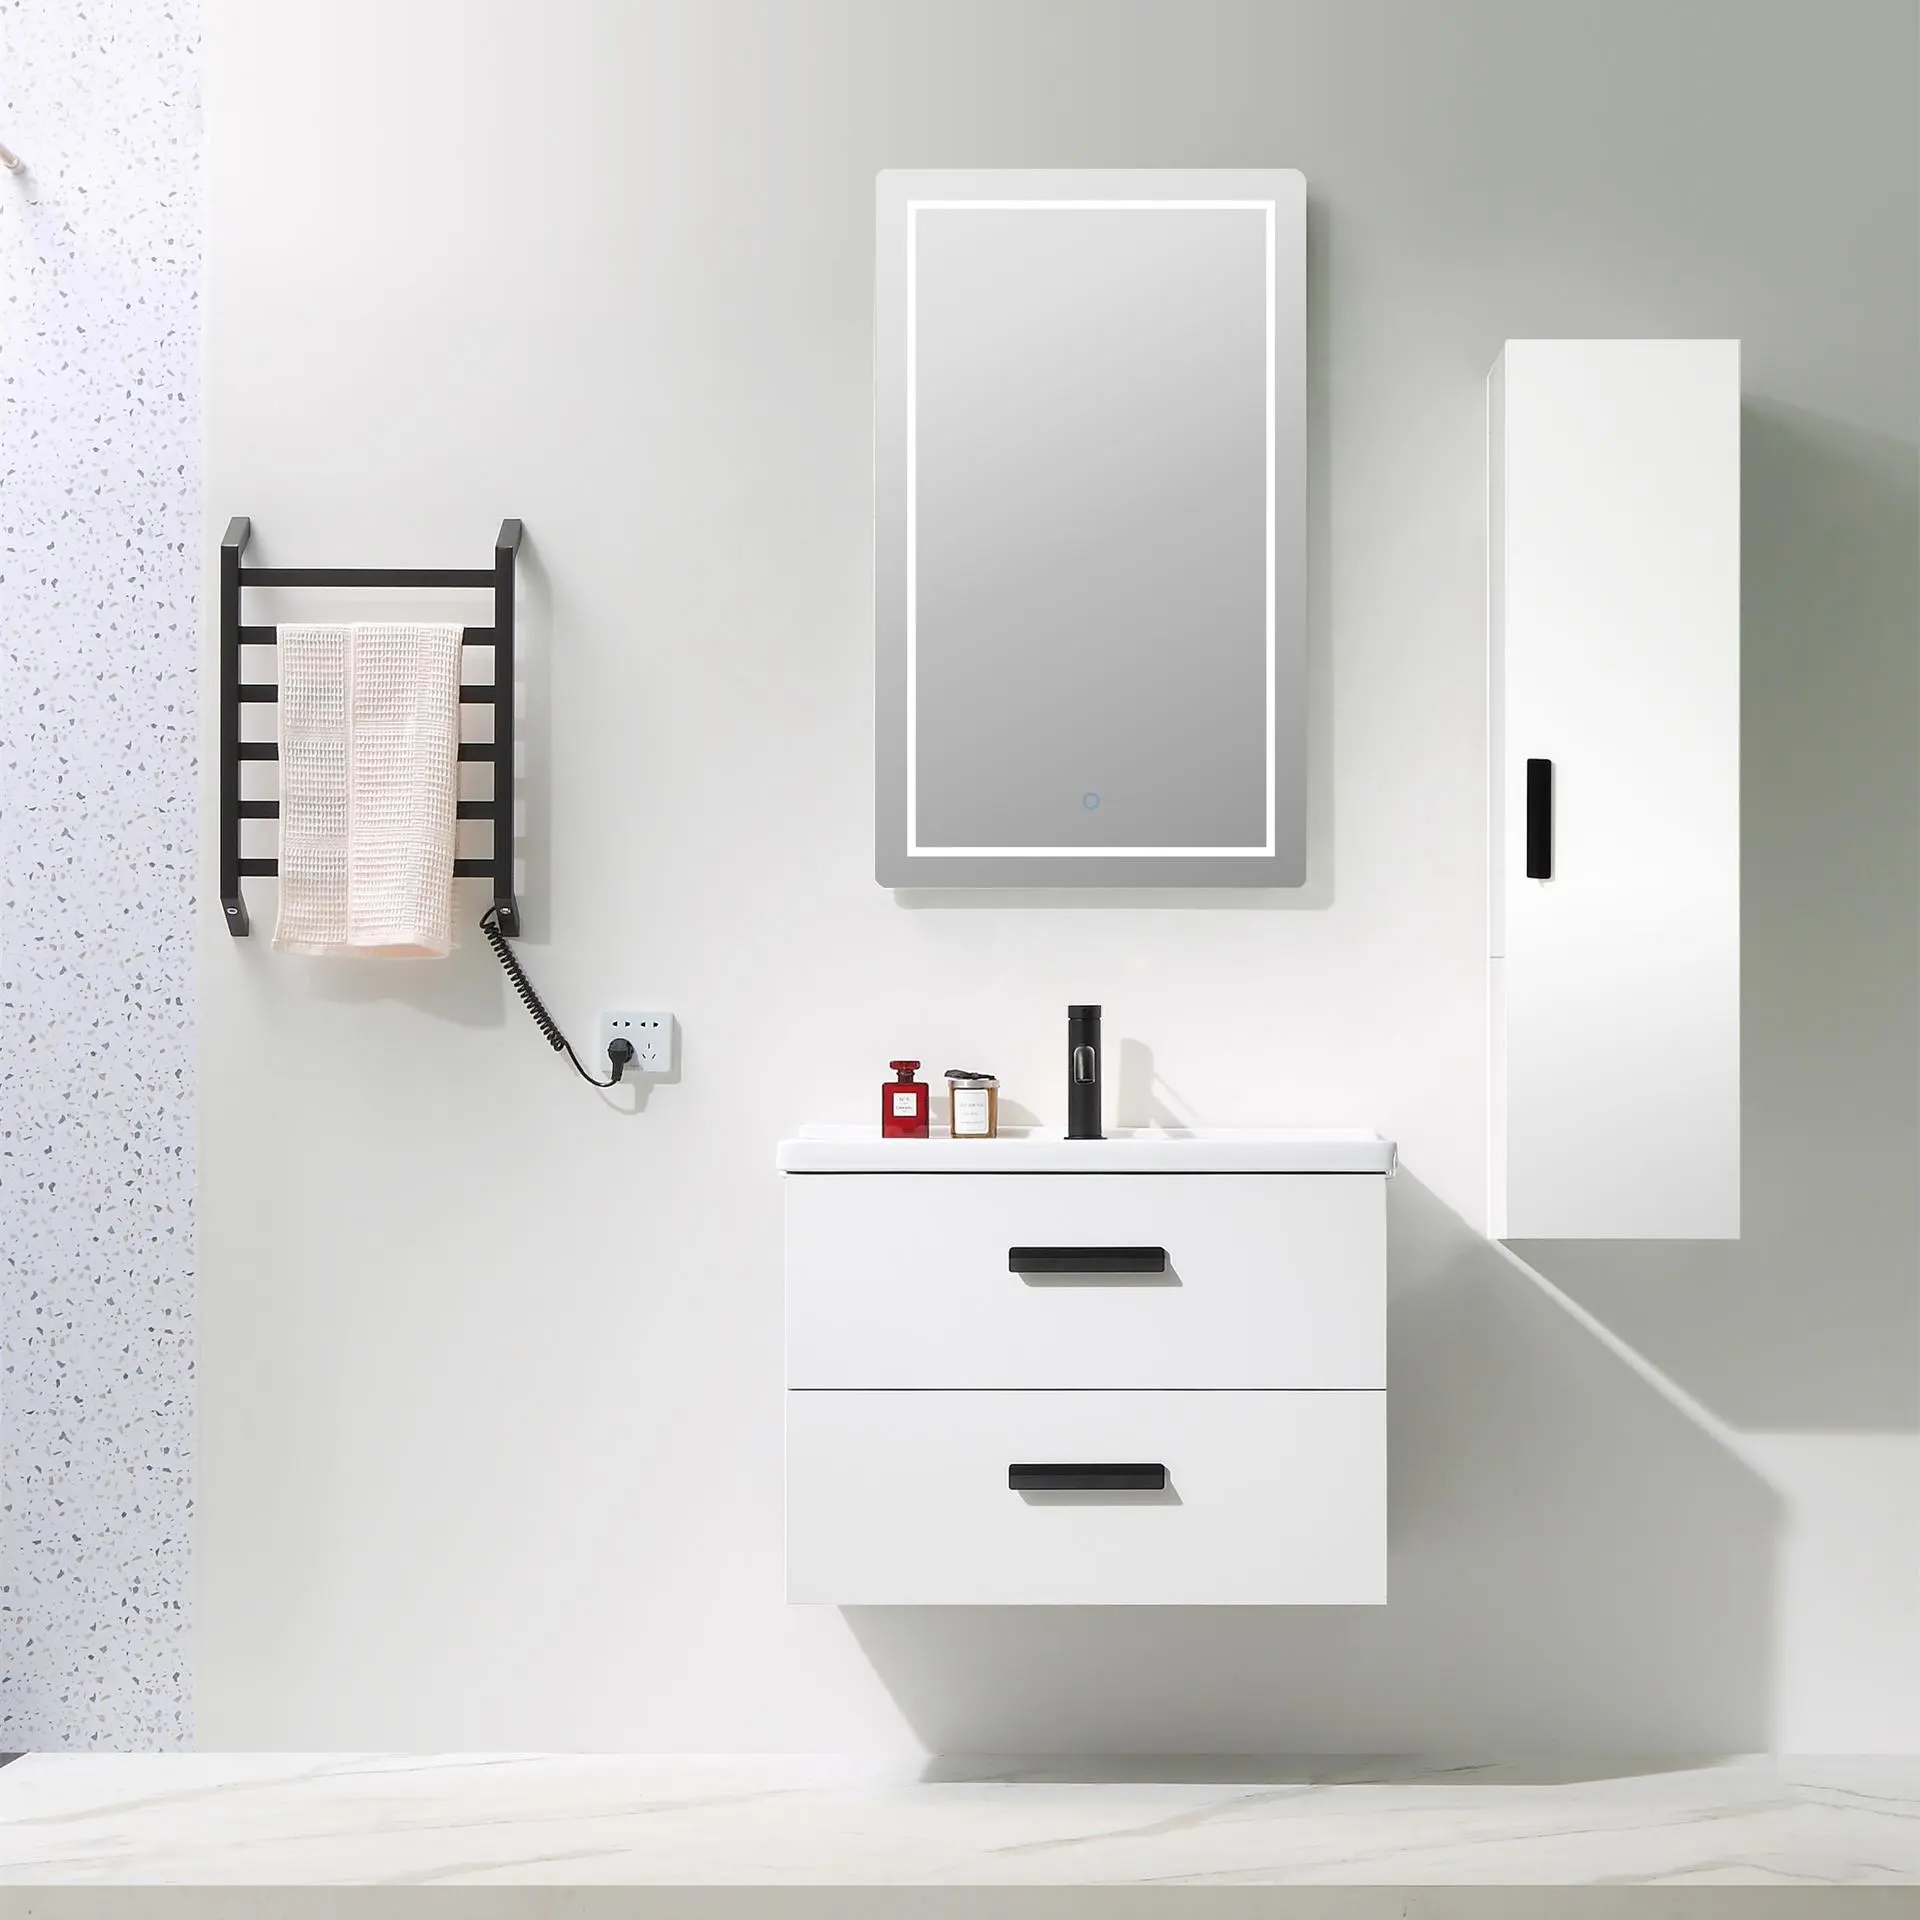 Rodas Series|Make bathroom Beauty simple